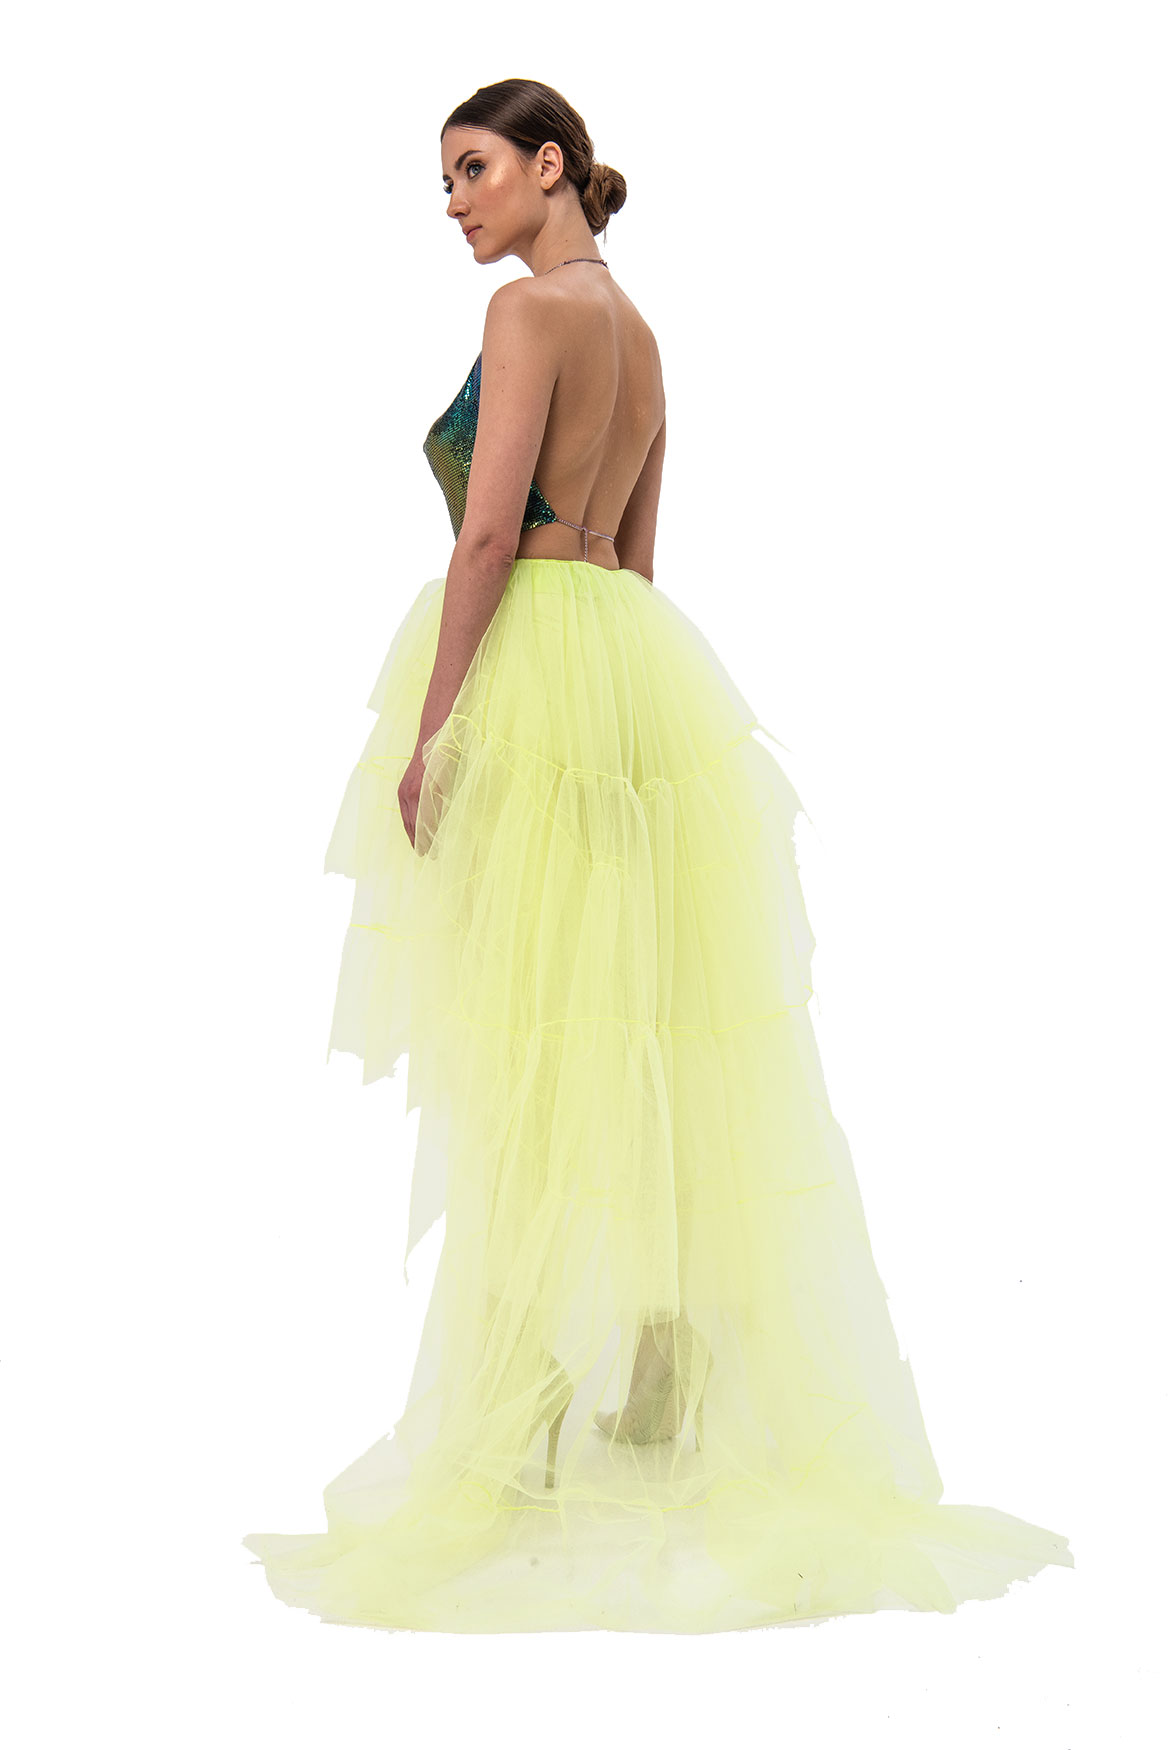 Tulle Detail Strapless Neon Yellow Sheer Mini Dress